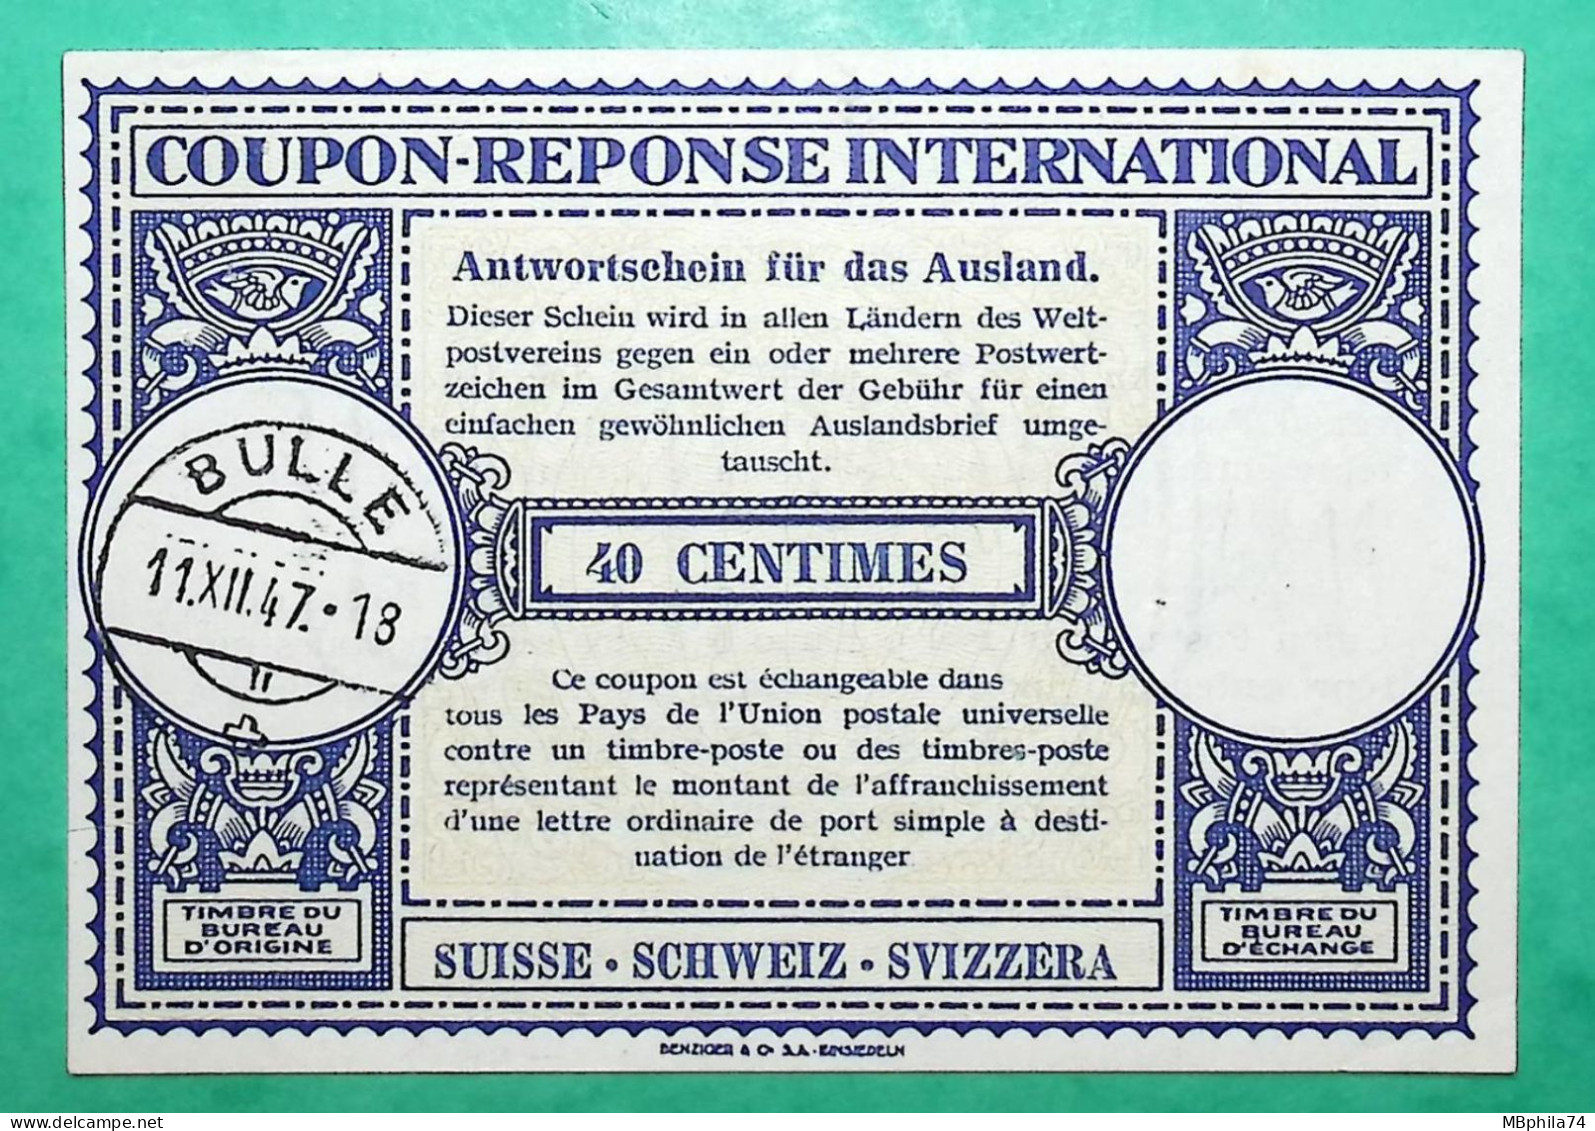 COUPON REPONSE INTERNATIONAL BULLE SUISSE 40C 1947 - Antwoordbons